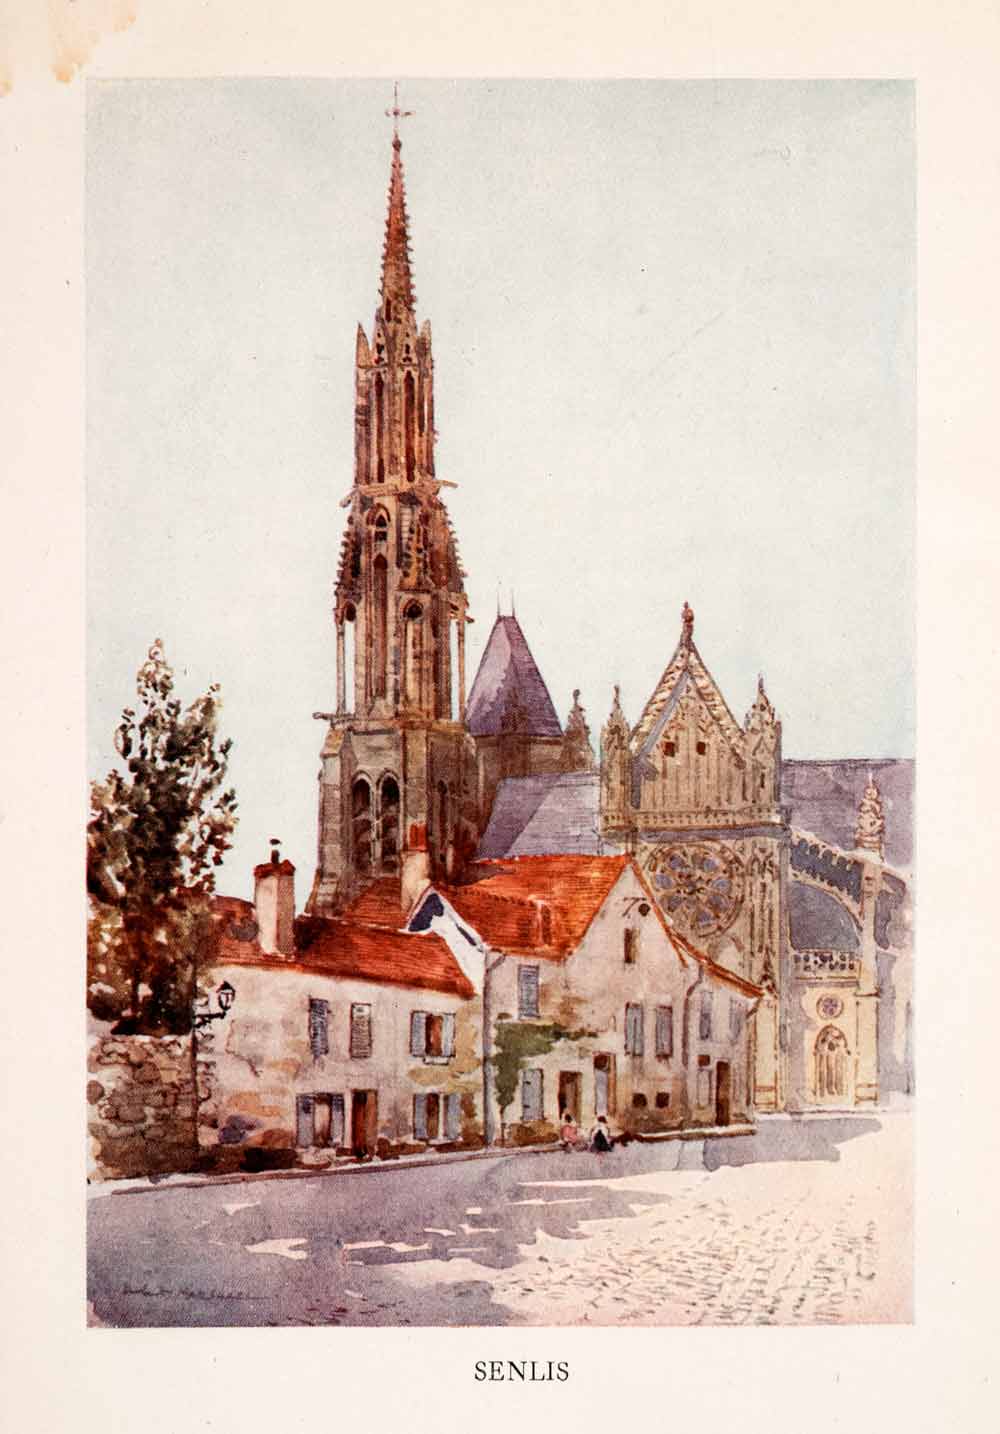 1907 Color Print Herbert Marshall Senlis Cathedral Notre Dame France Spire XGLA2